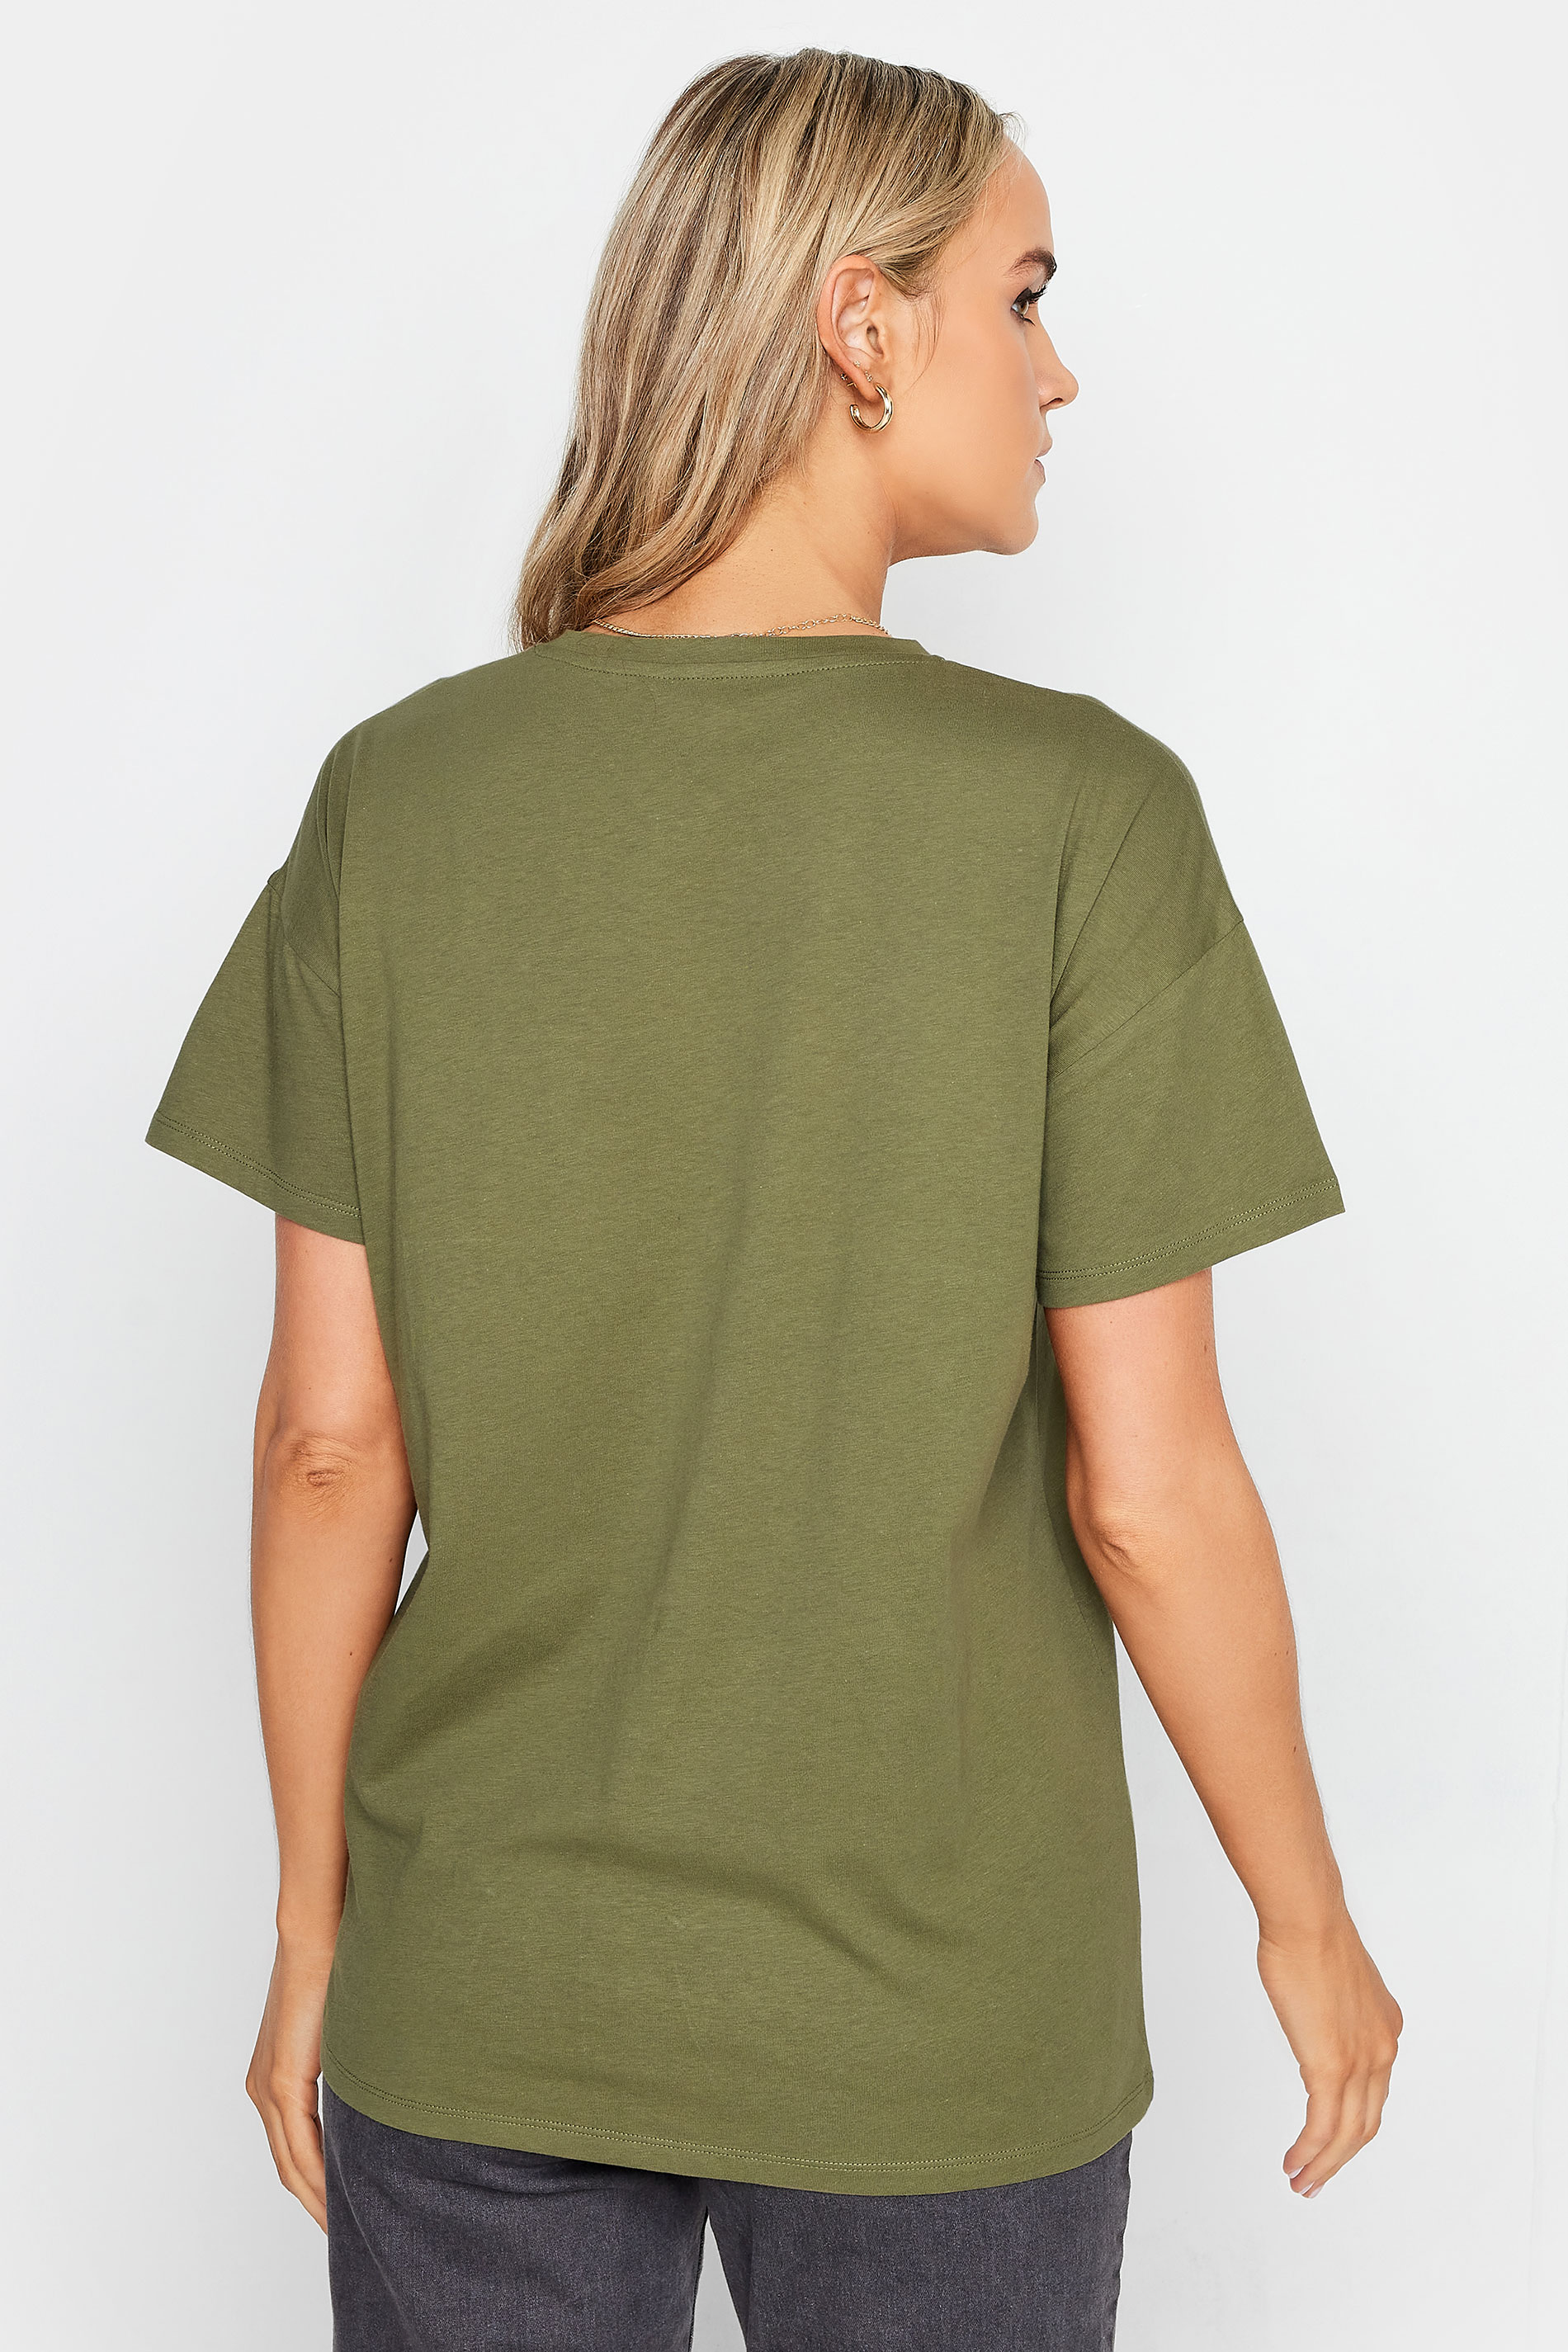 LTS Tall Khaki Green Utility Pocket Cotton T-Shirt | Long Tall Sally 3